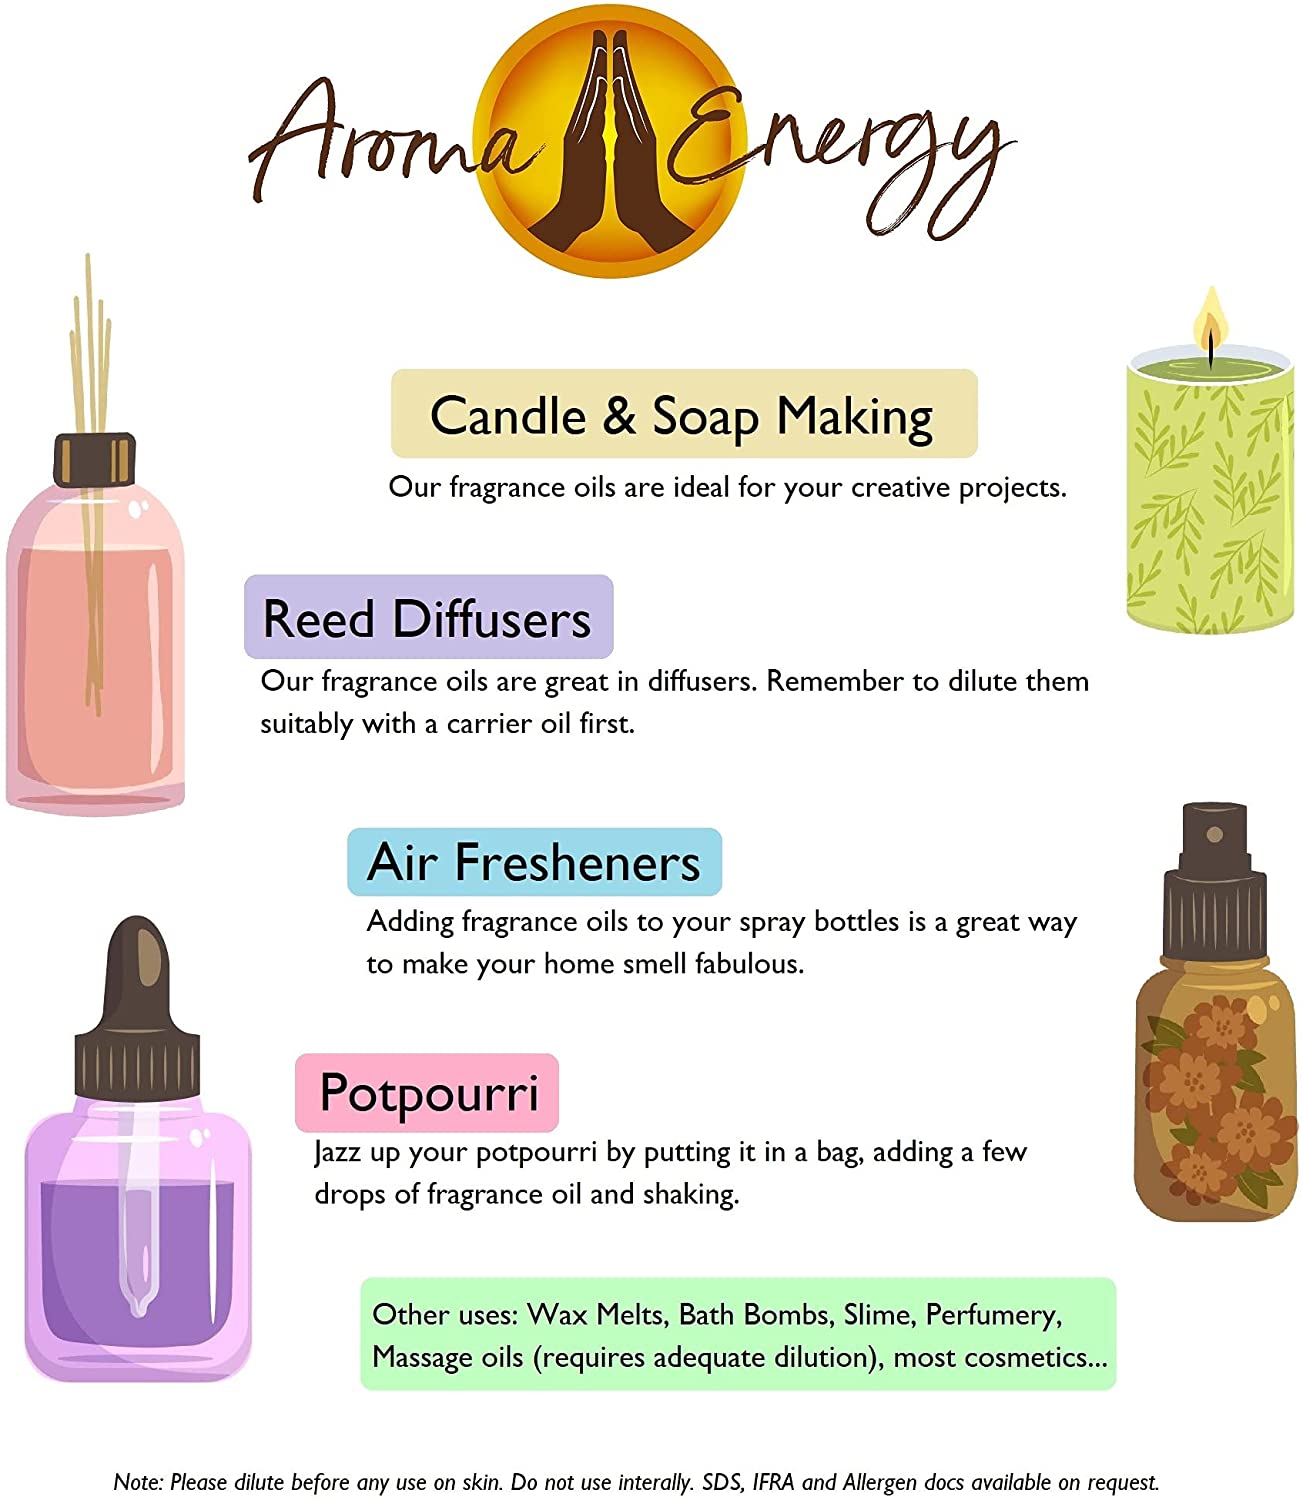 Sweet Pea Fragrance Oil - Aroma Energy